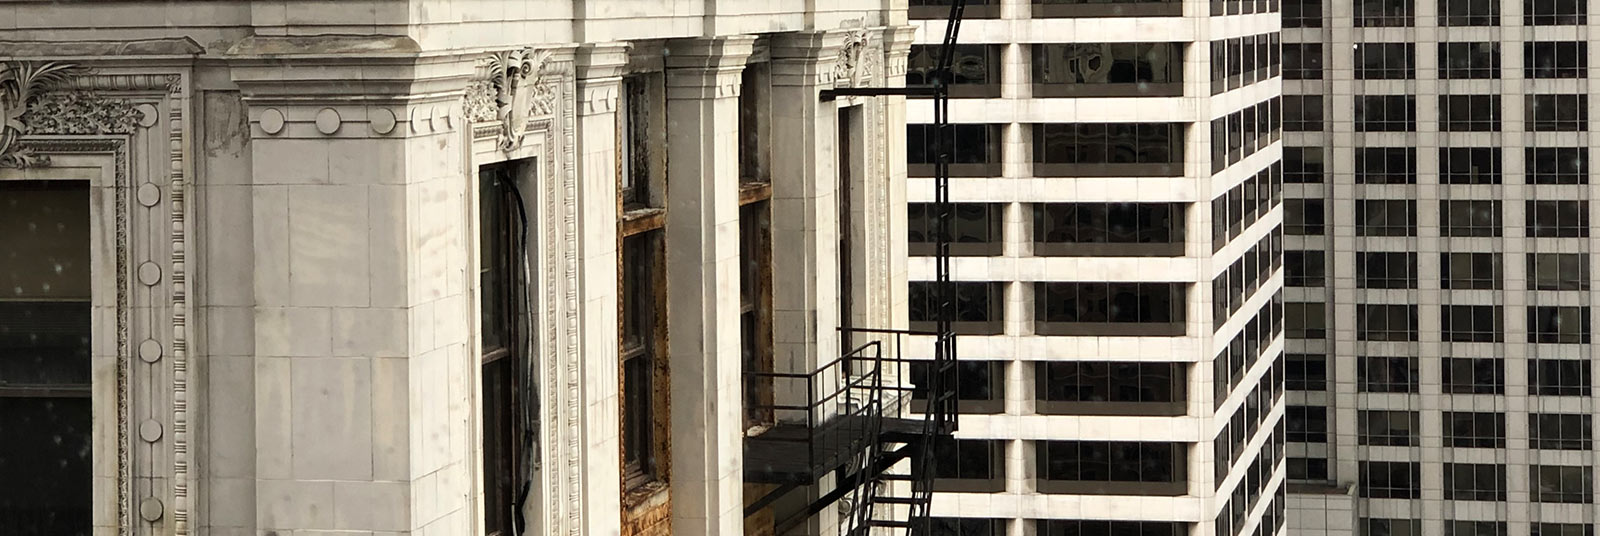 View of the fire escape on the Traction Building in Cincinnati, Ohio